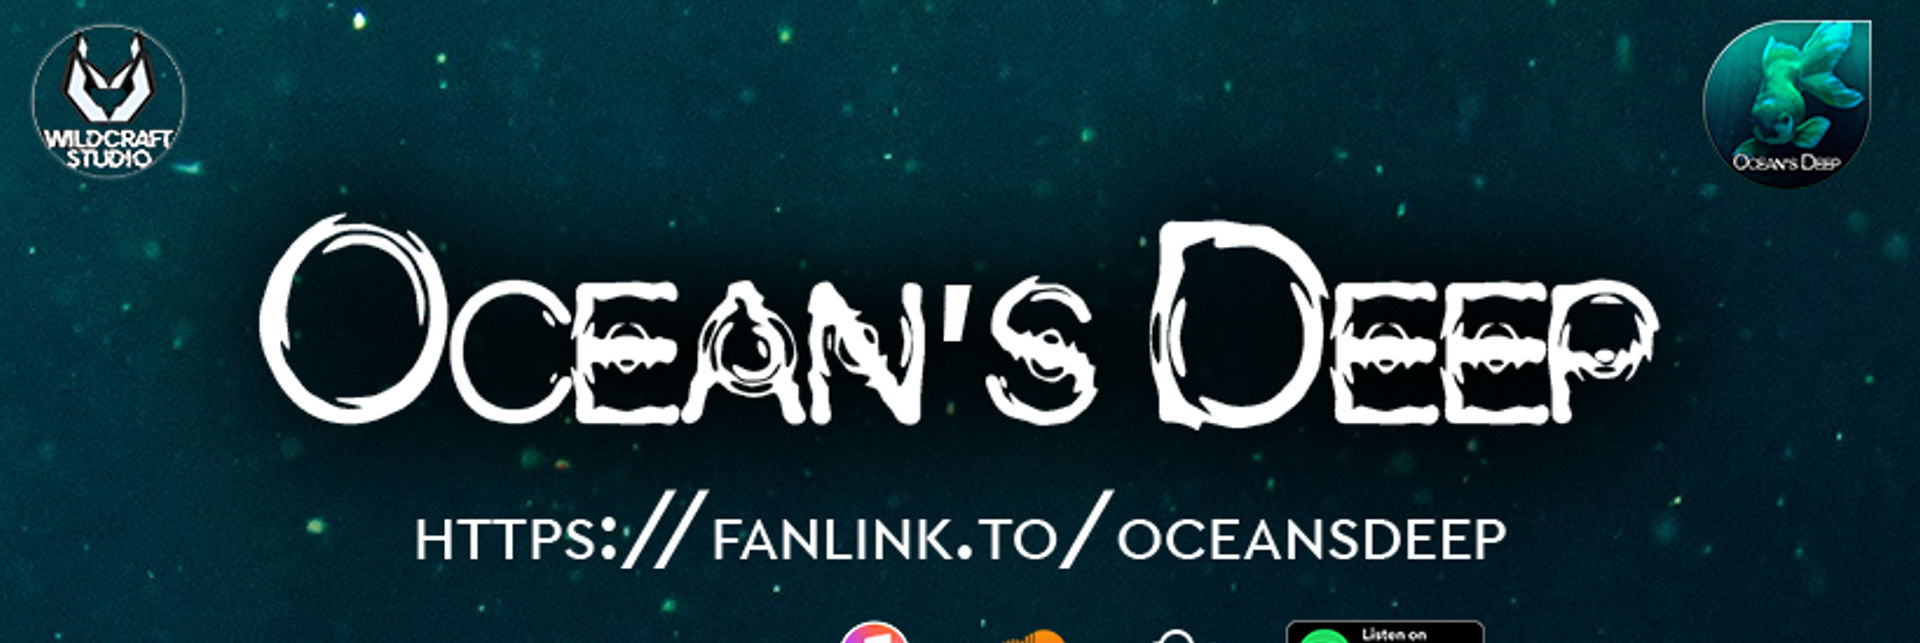 Oceansdeepmusic